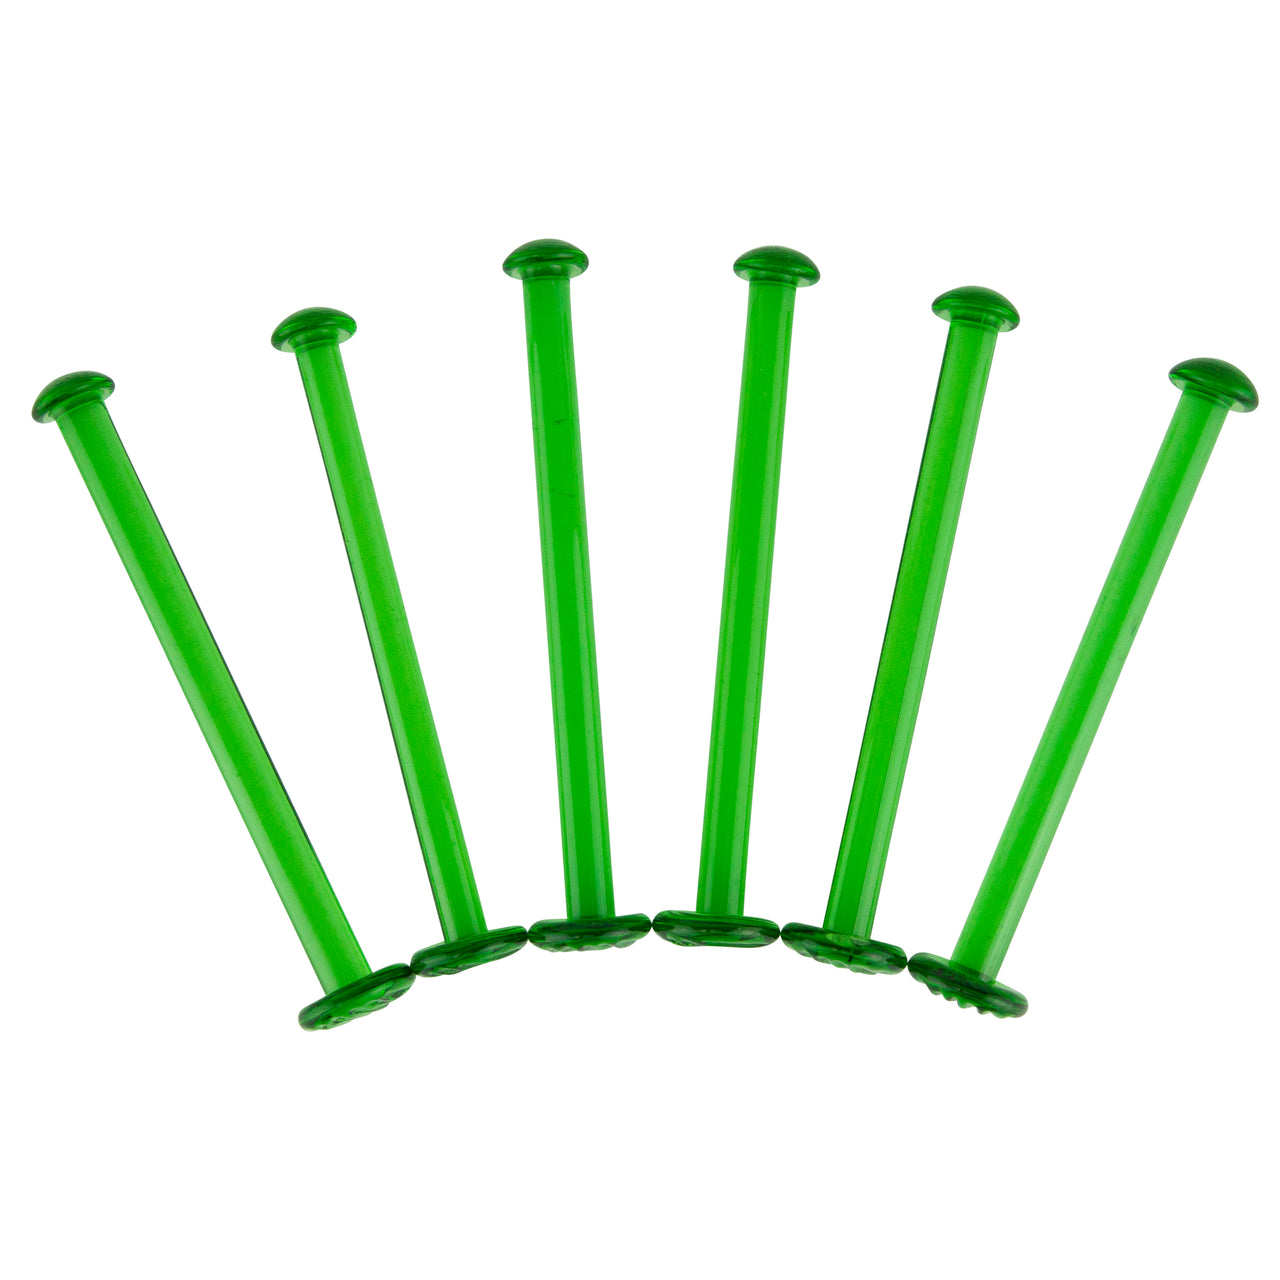 Vintage Green Glass Muddling Stir Sticks | The Hour Bar Tools